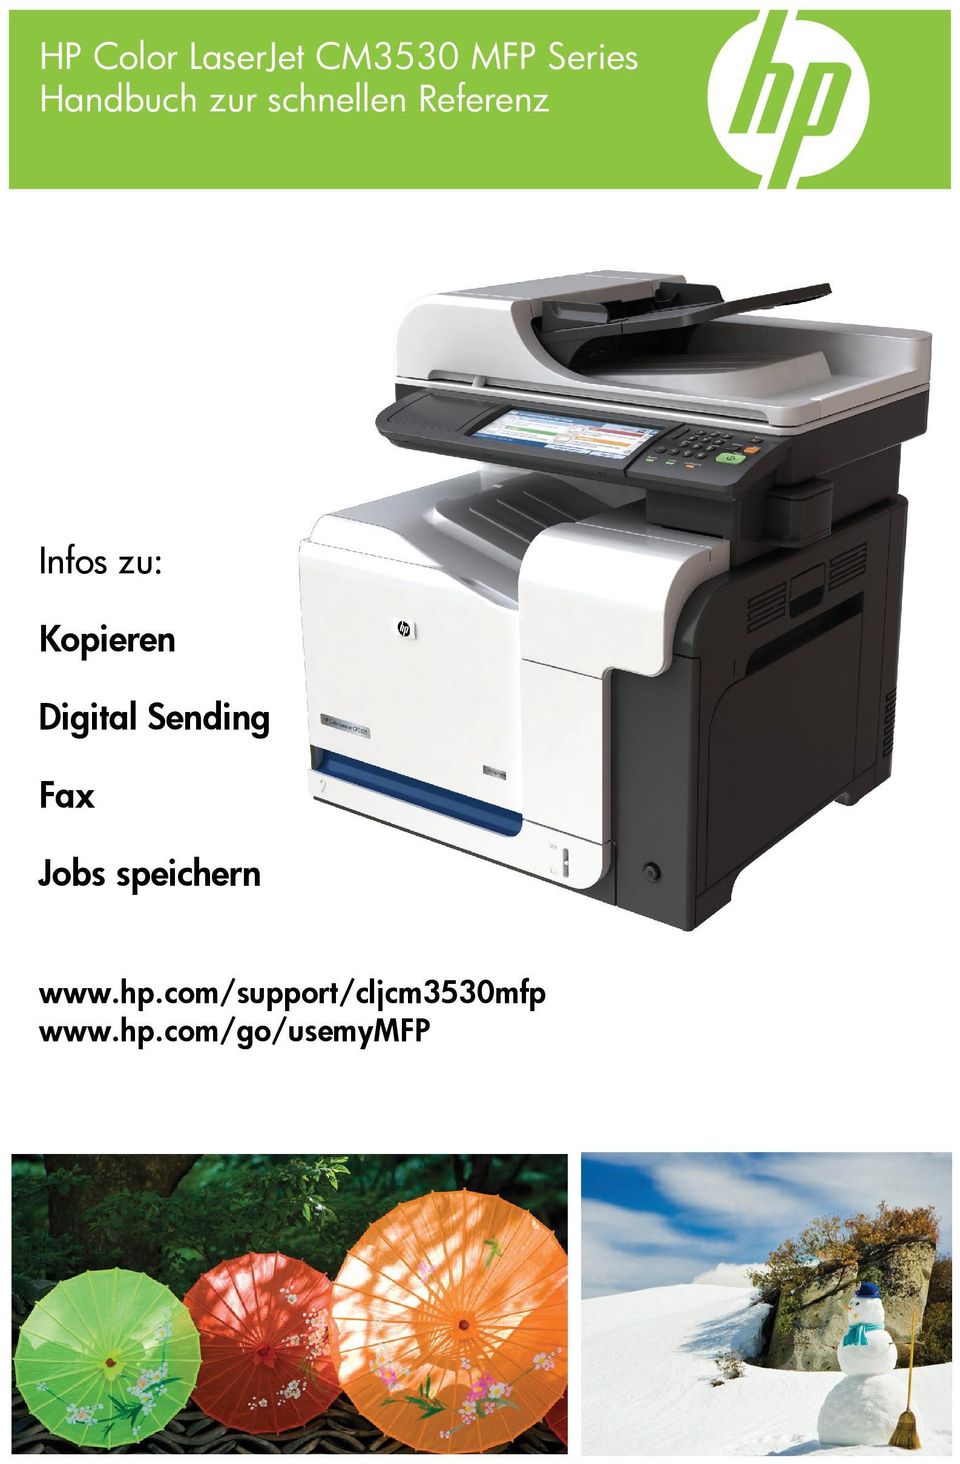 Kopieren Digital Sending Fax Jobs